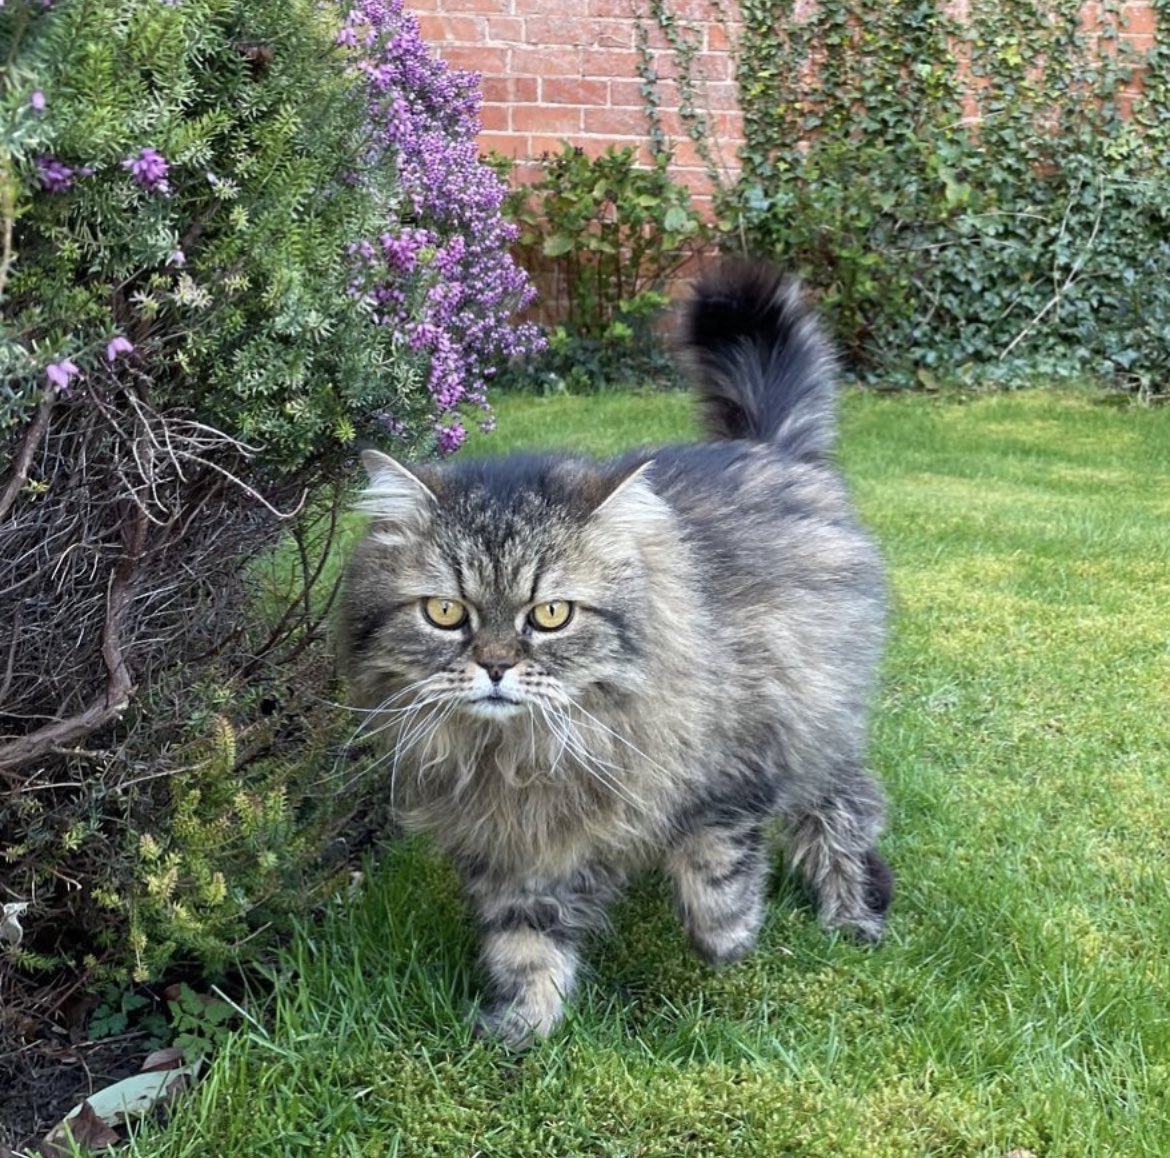 In memory of Leo. King of the Birmingham Cat Club ❤️🌈#InternationalCatDay